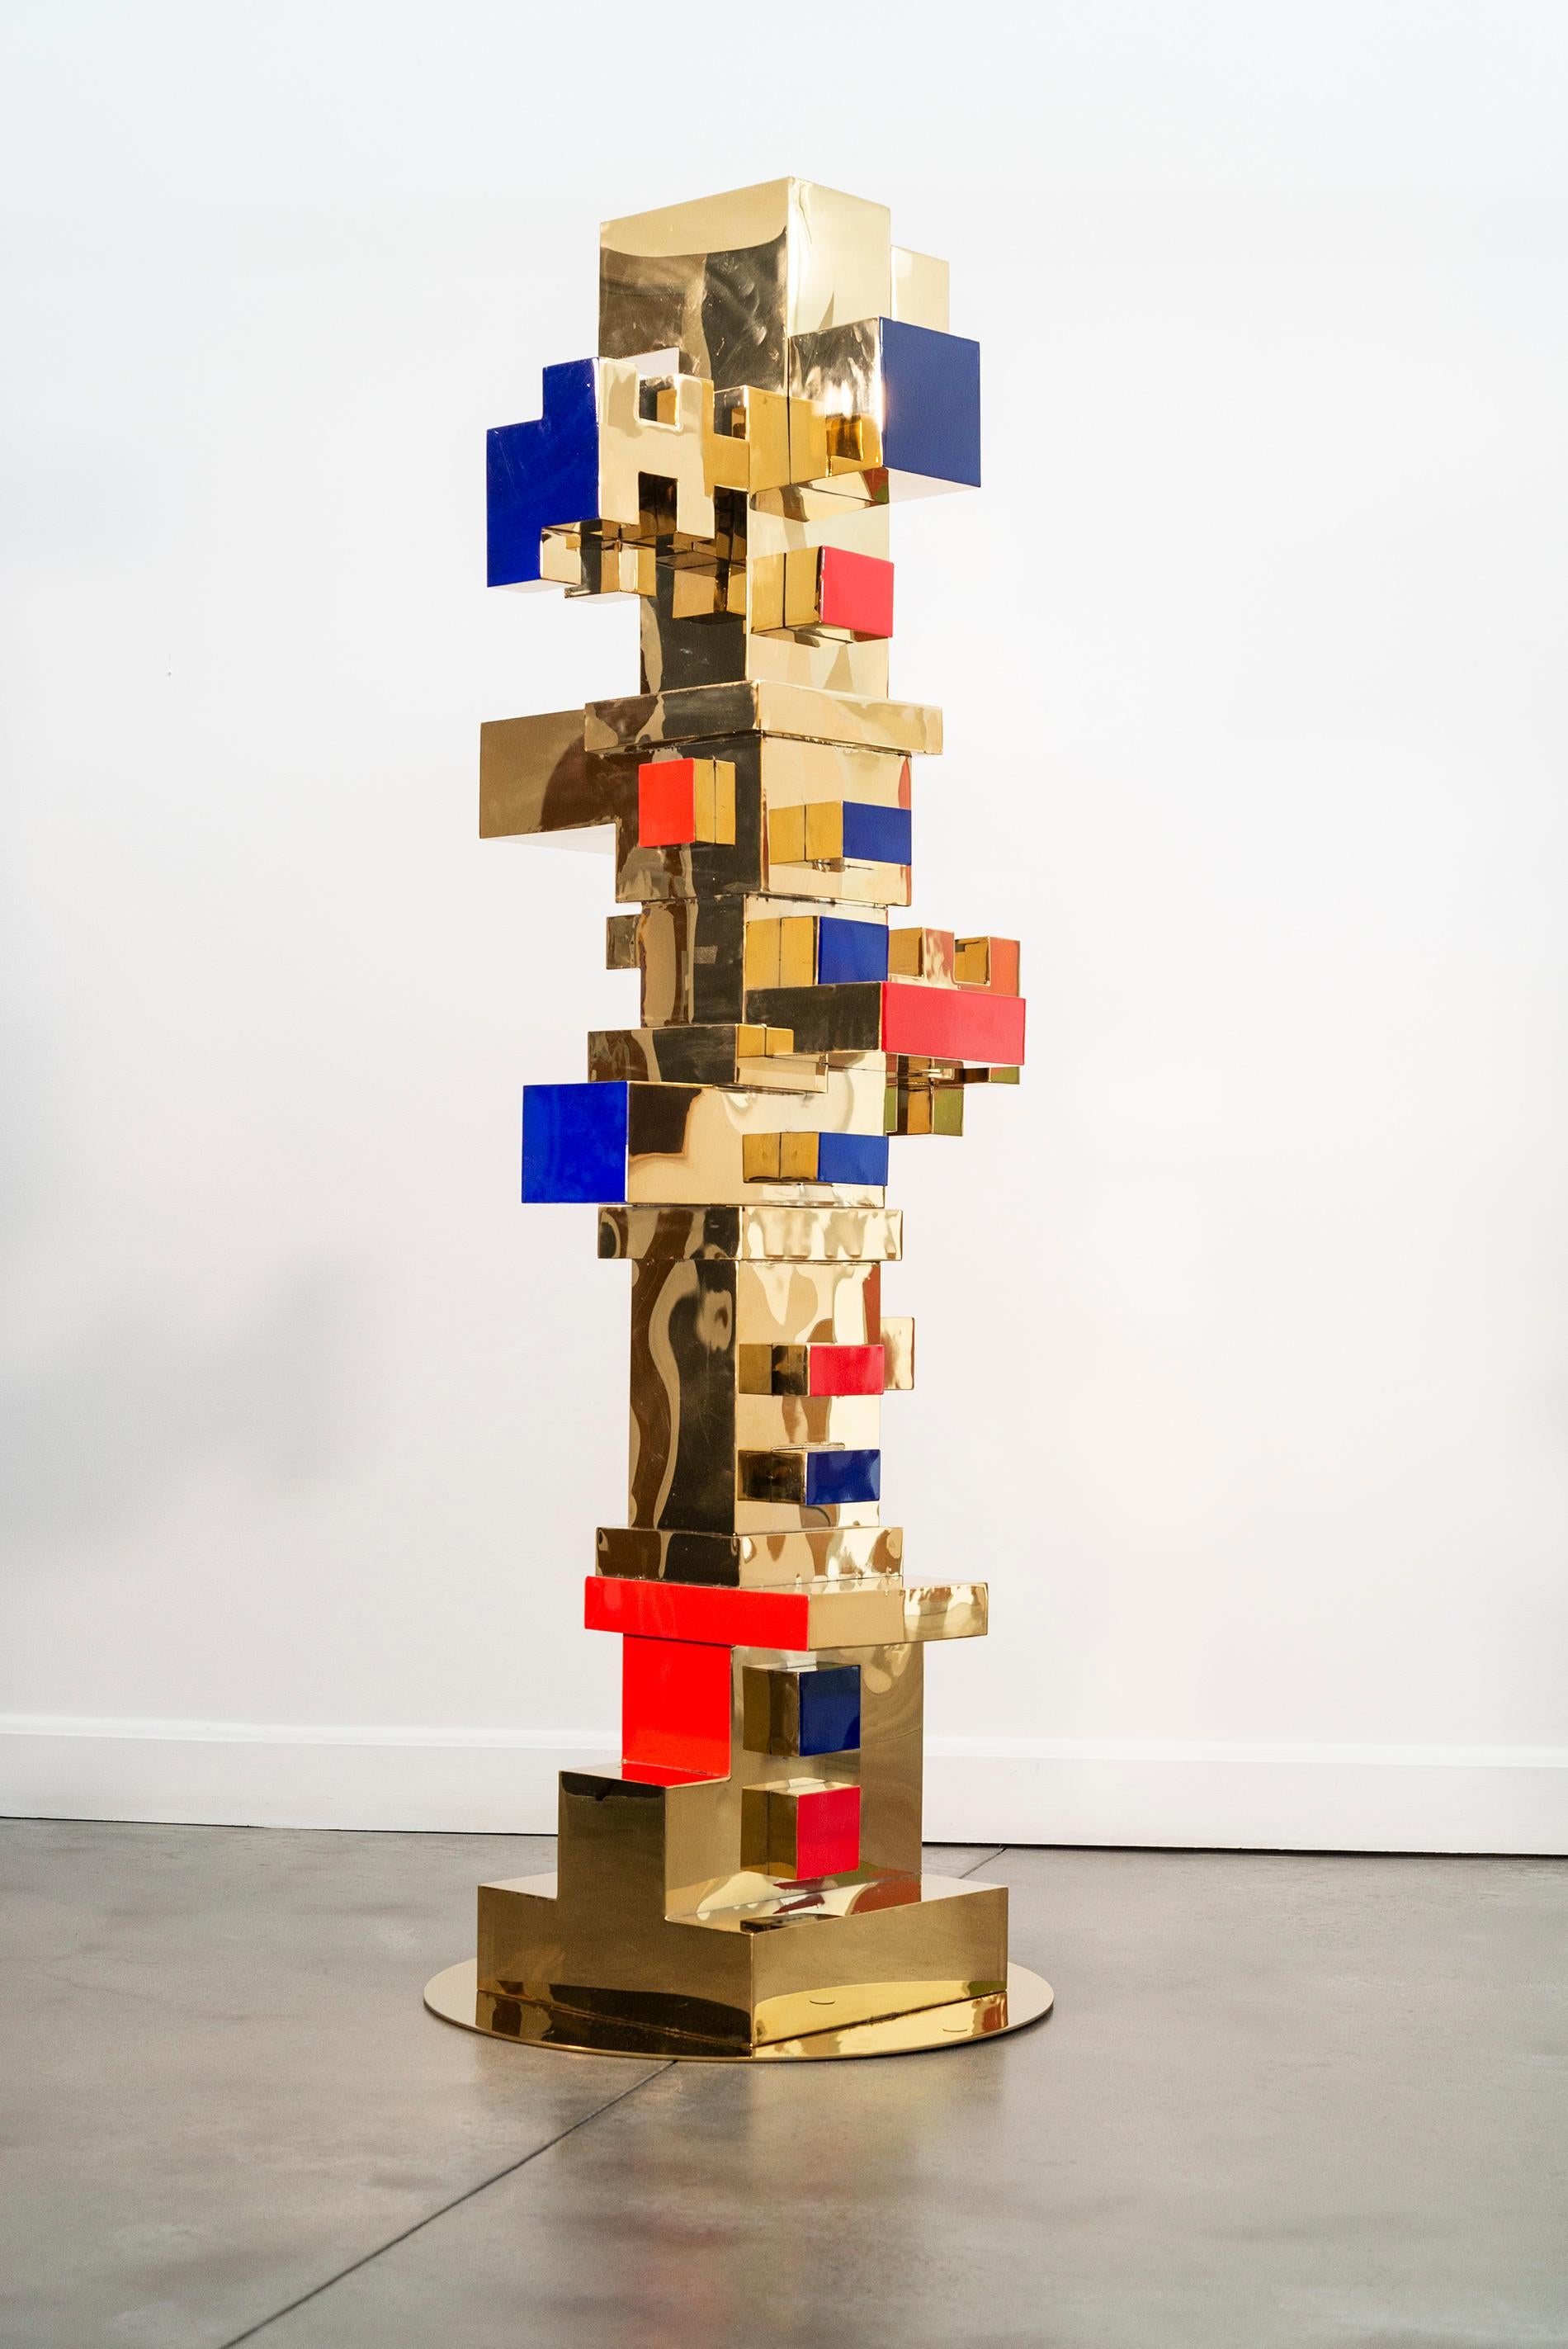 Abstract Sculpture Viktor Mitic - Blocs empilés - or, rouge, bleu - totem, sculpture en acier inoxydable plaqué or